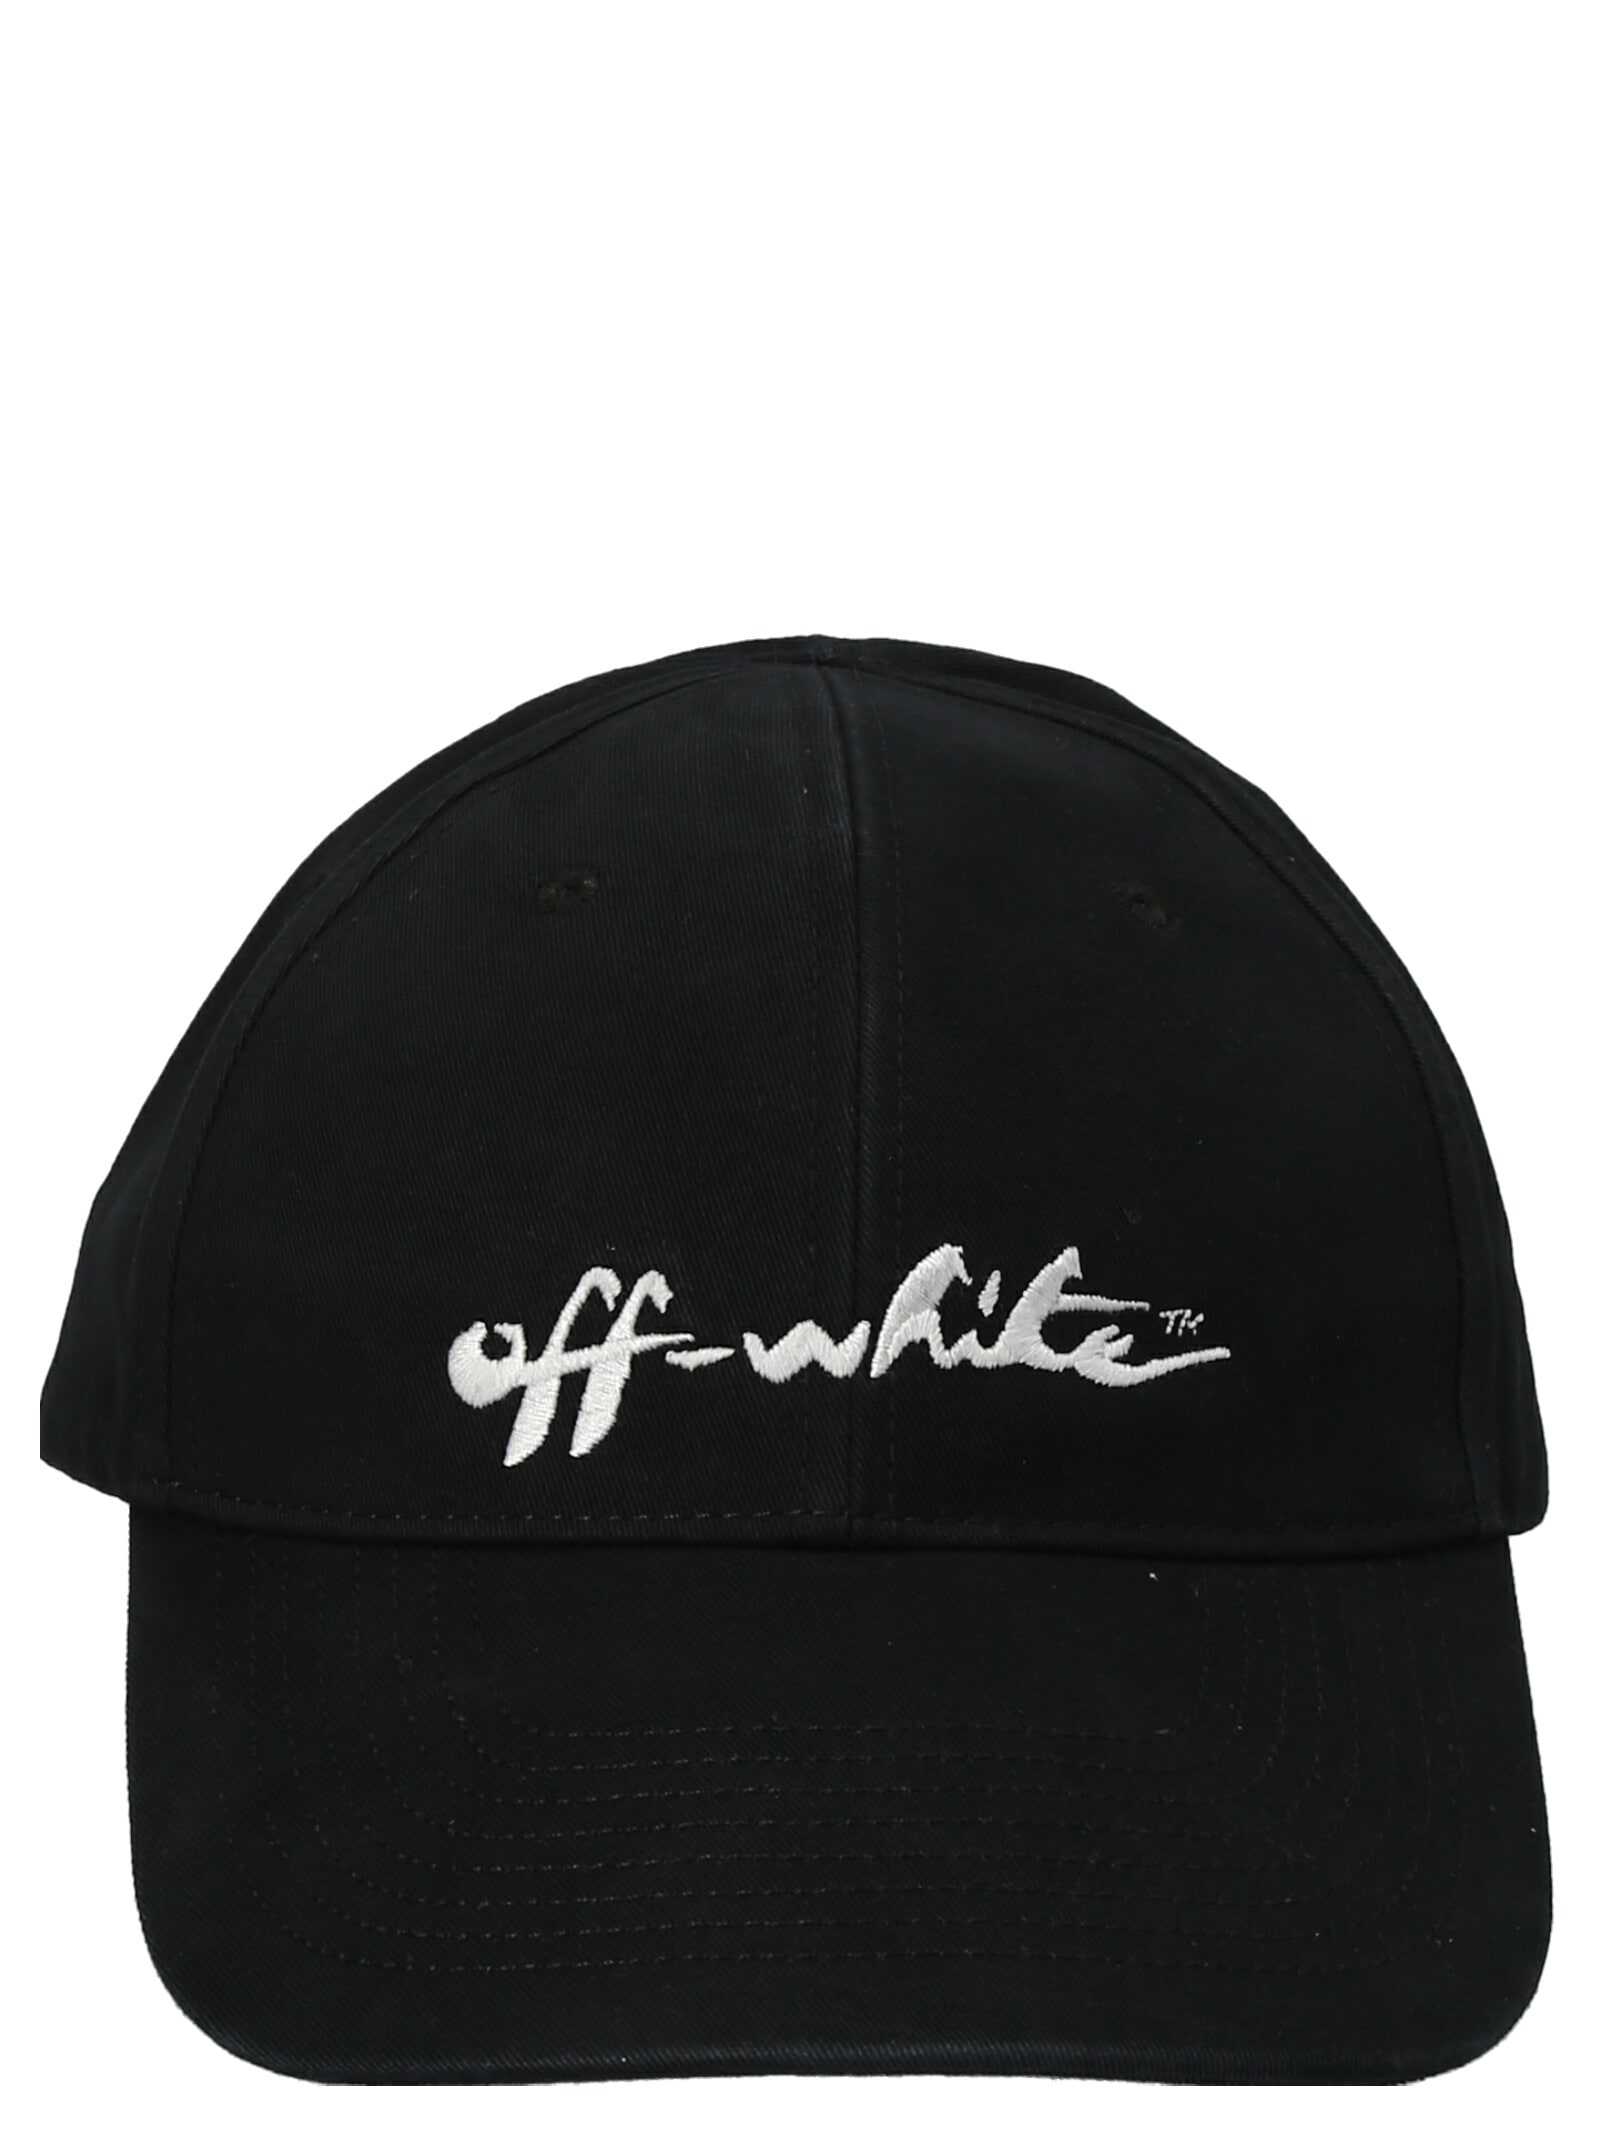 Off-White handpaint Cap